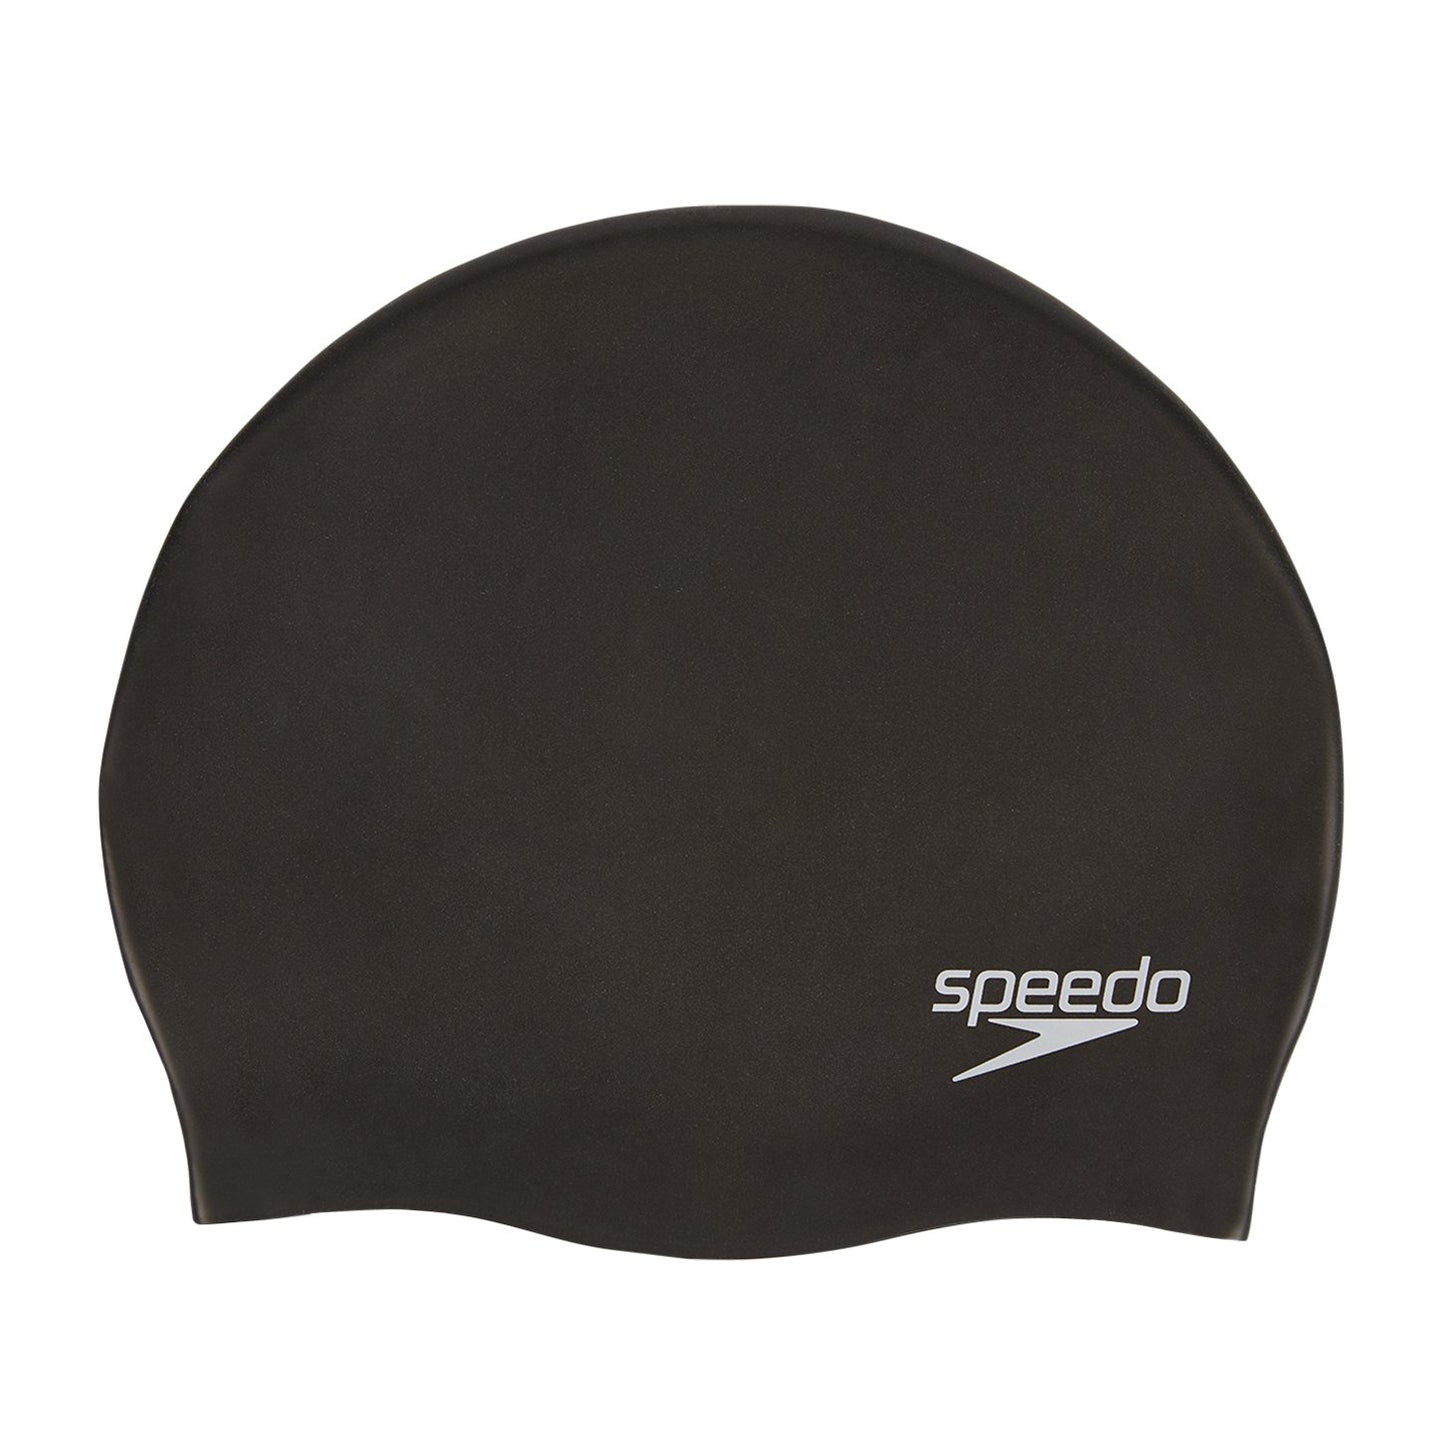 Speedo Plain Moulded Silicone Swimming Cap, Free Size (Black/Gold) - Best Price online Prokicksports.com